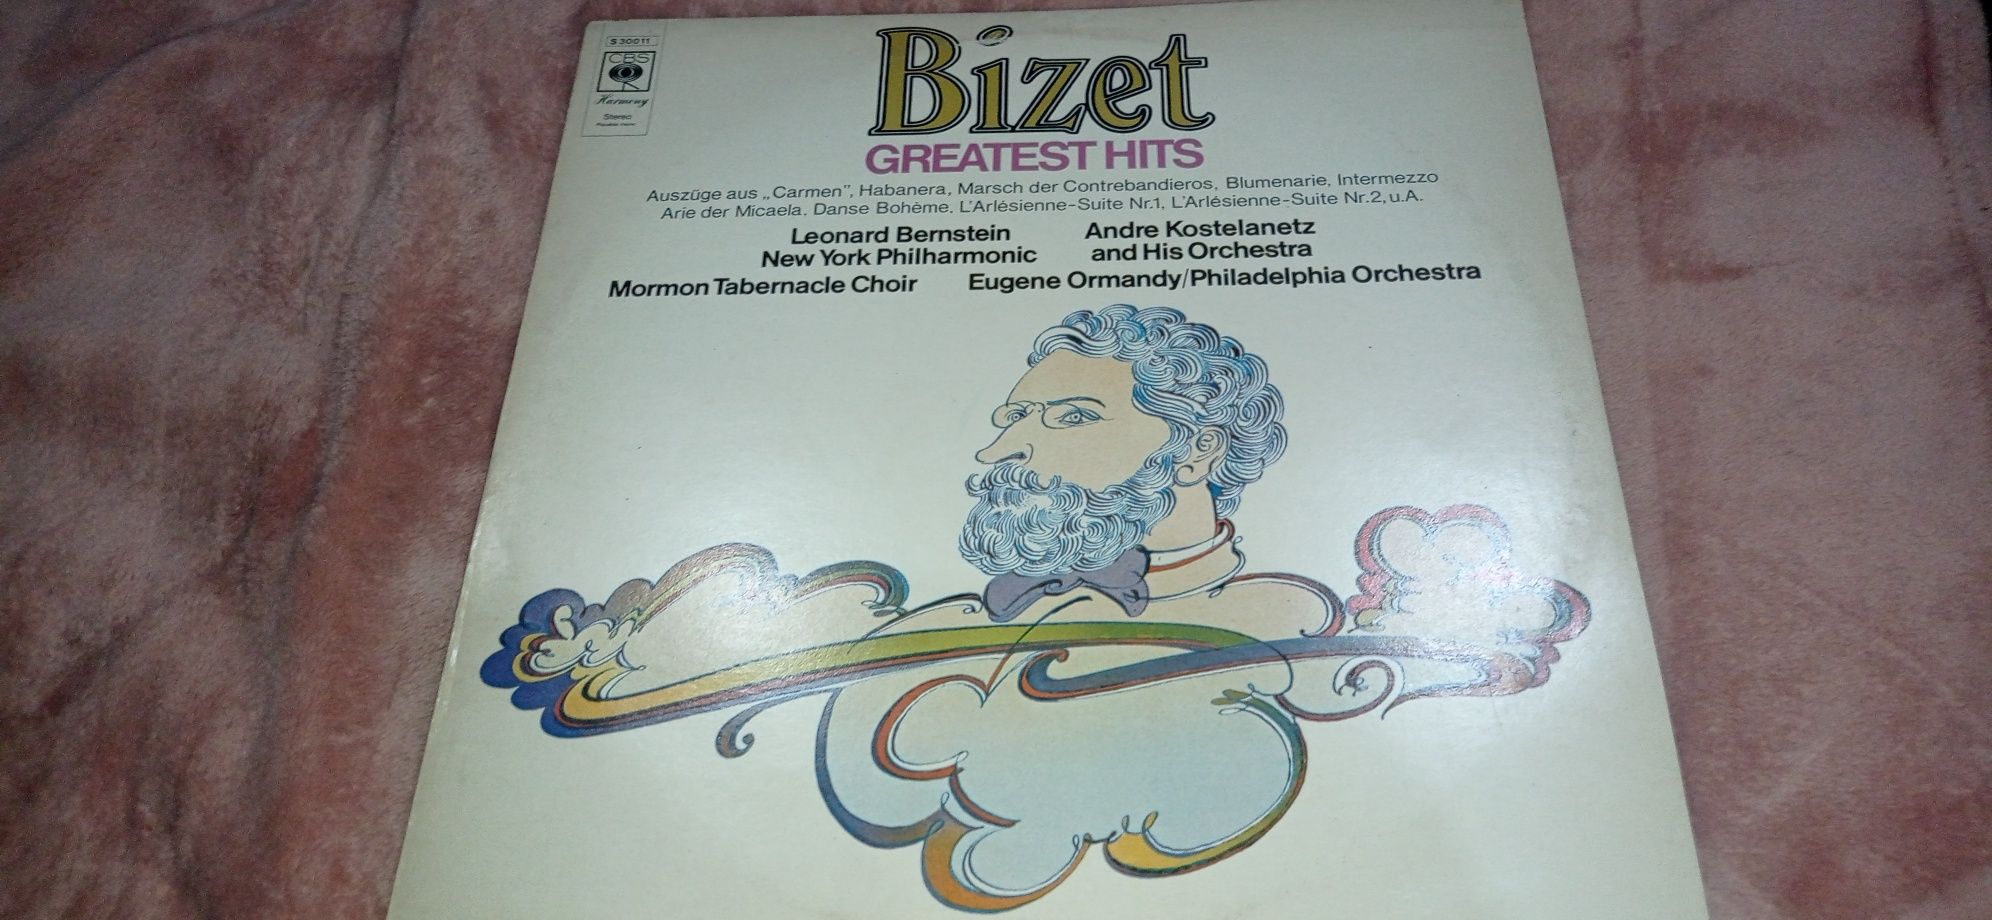 Bizet greatest hits płyta winylowa stara